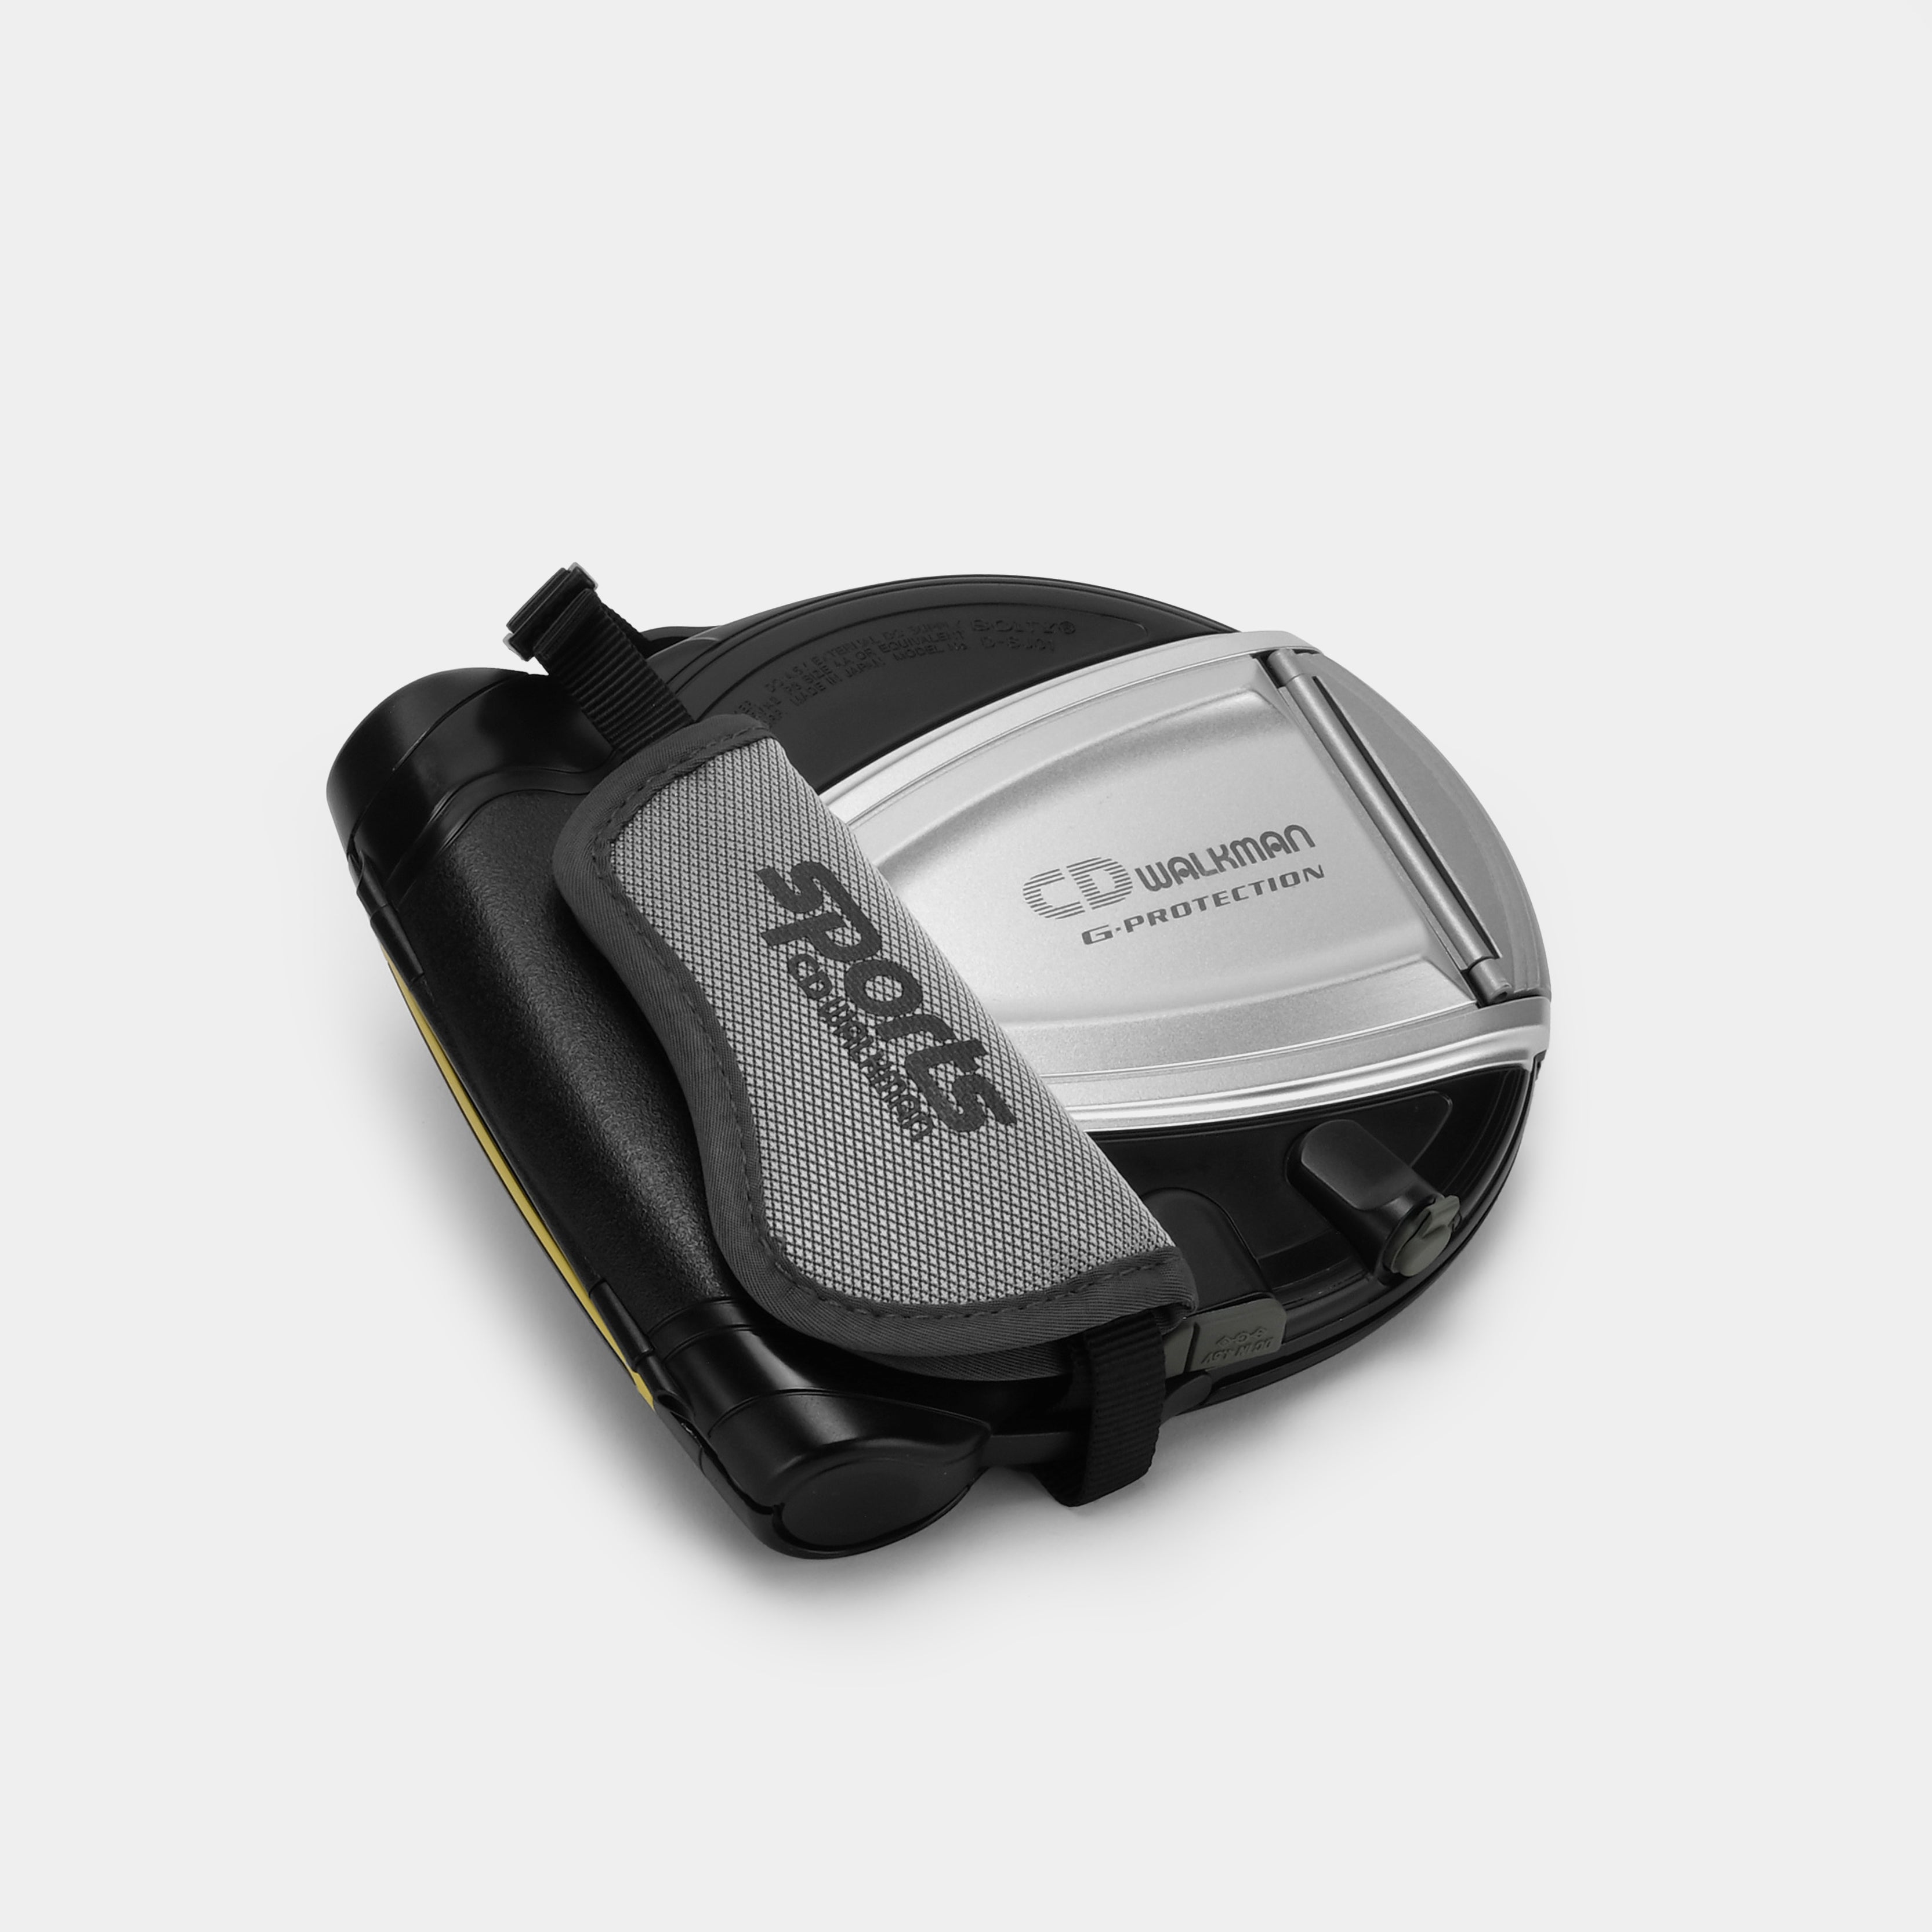 Sony Sports Walkman D-SJ01 Portable CD Player